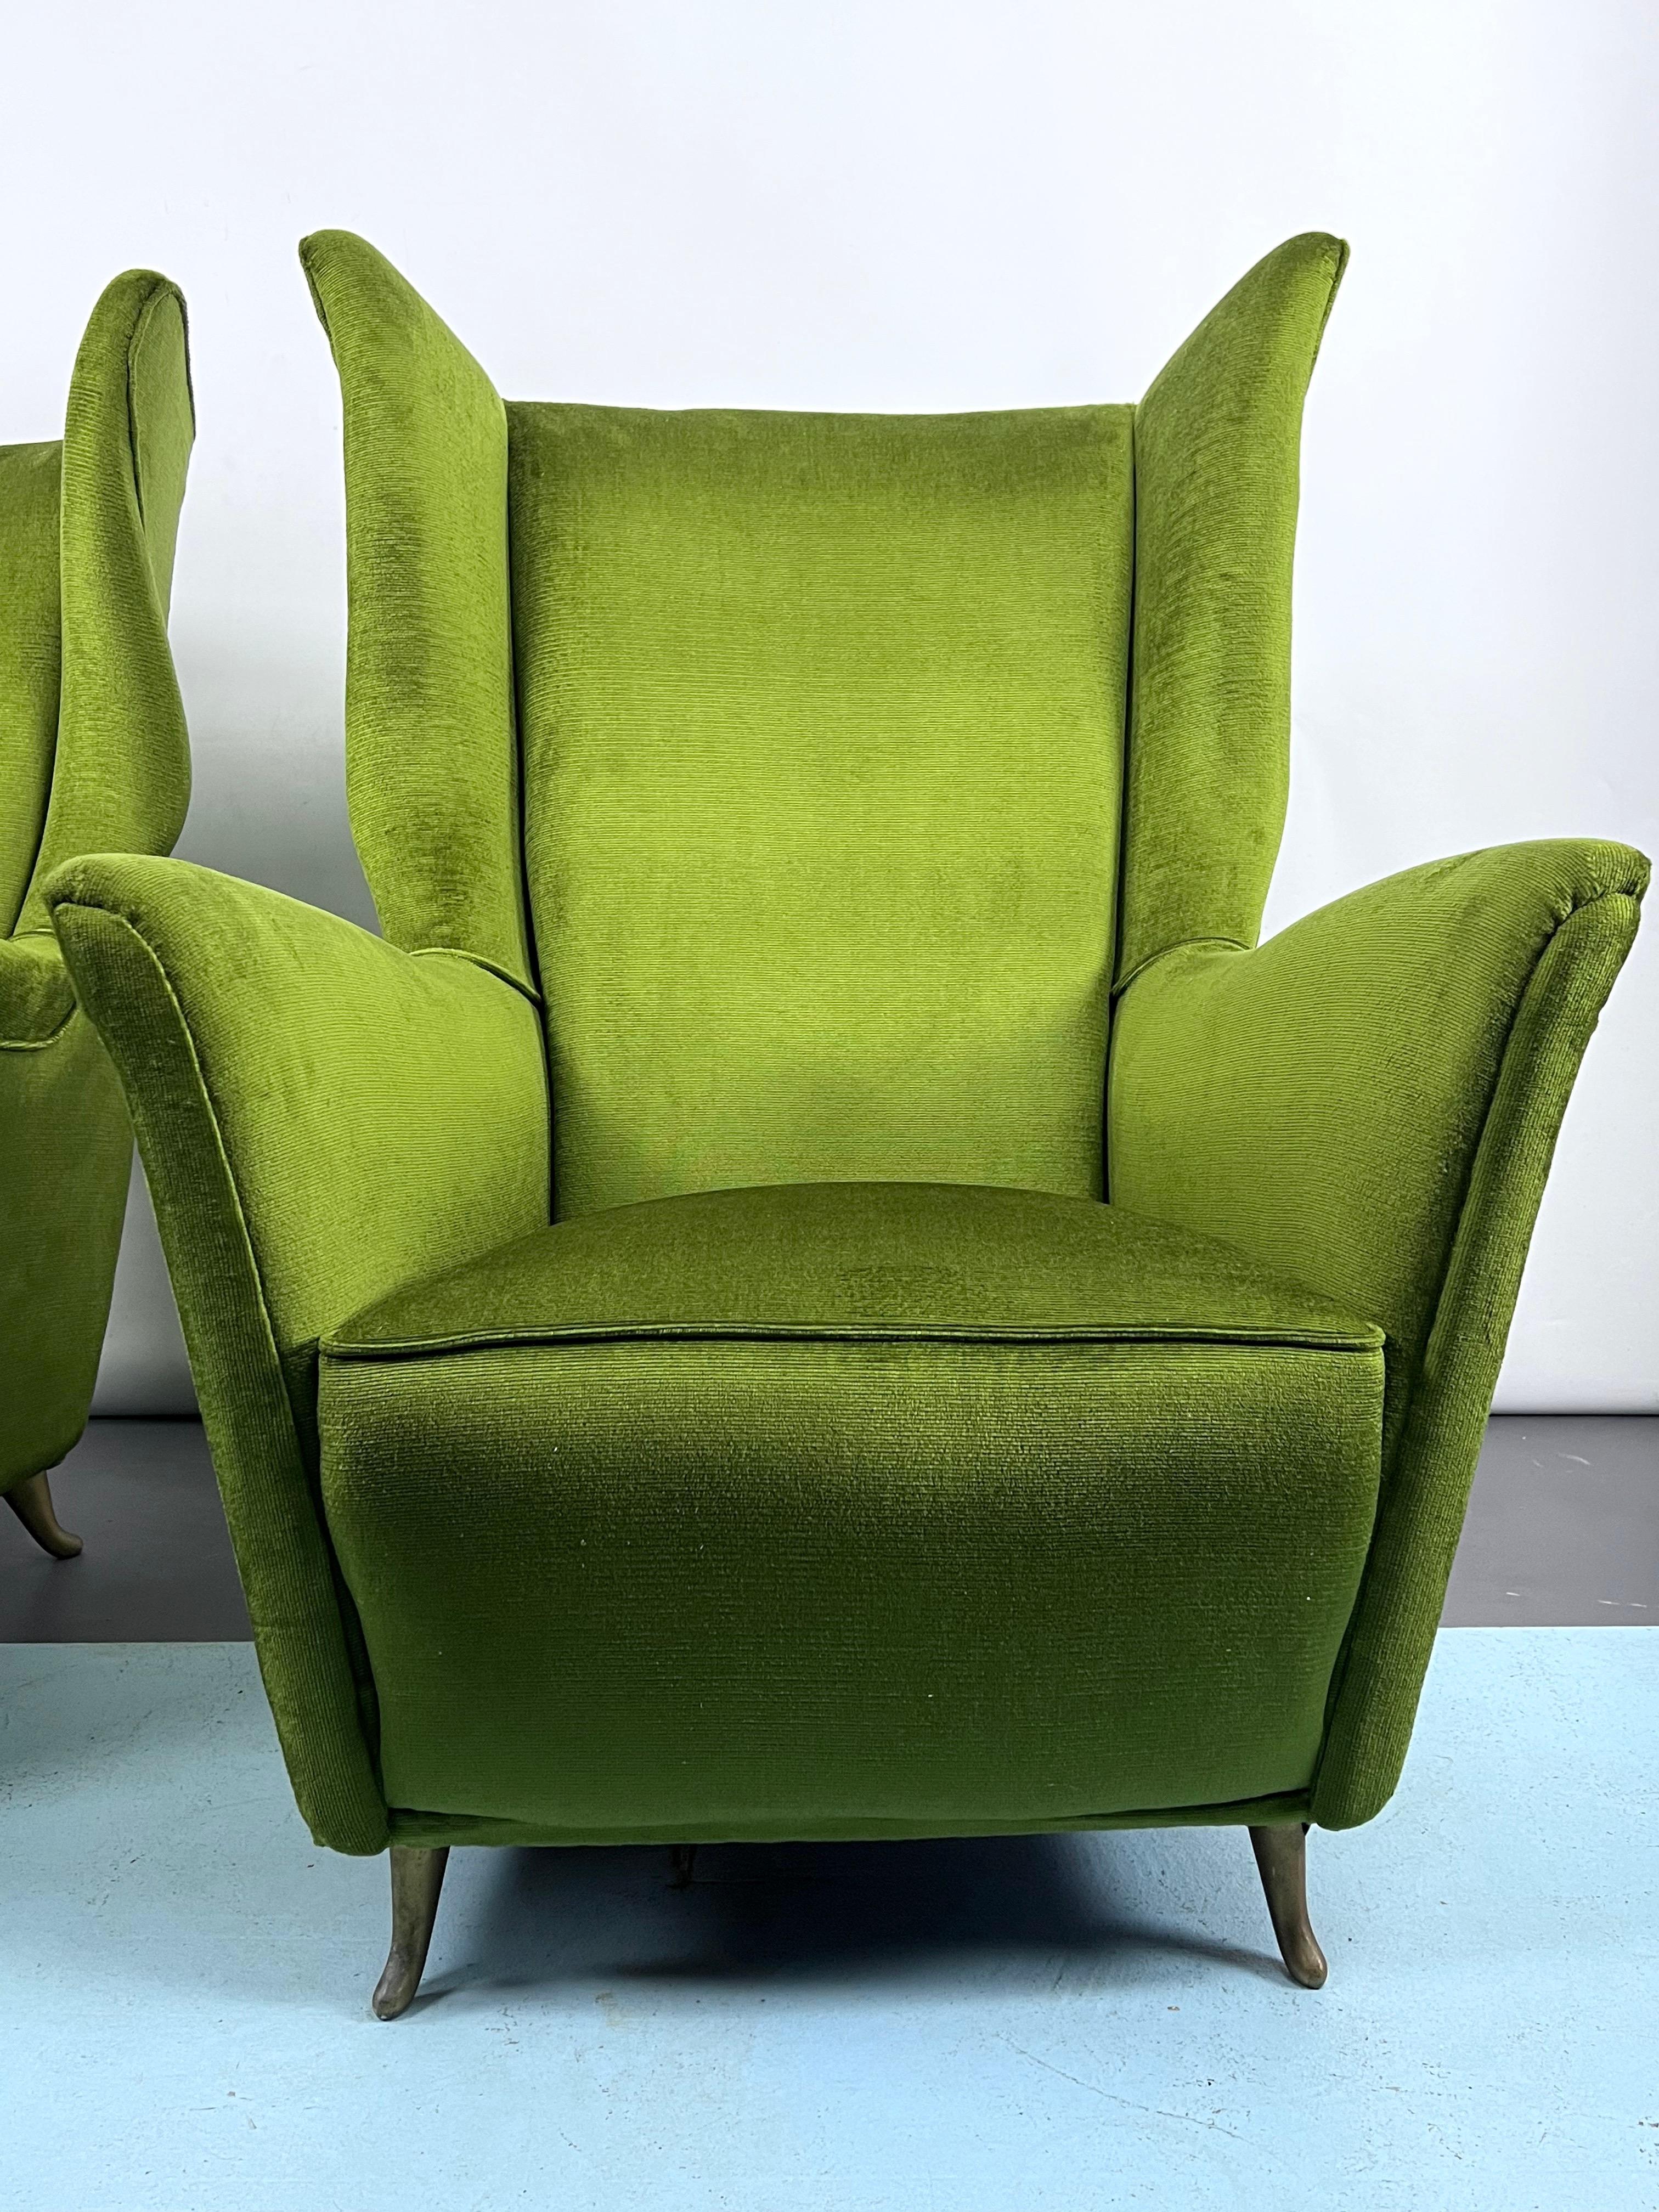 Rare Midcentury Italian Green Velvet ISA Armchairs Attributable to Gio Ponti For Sale 8